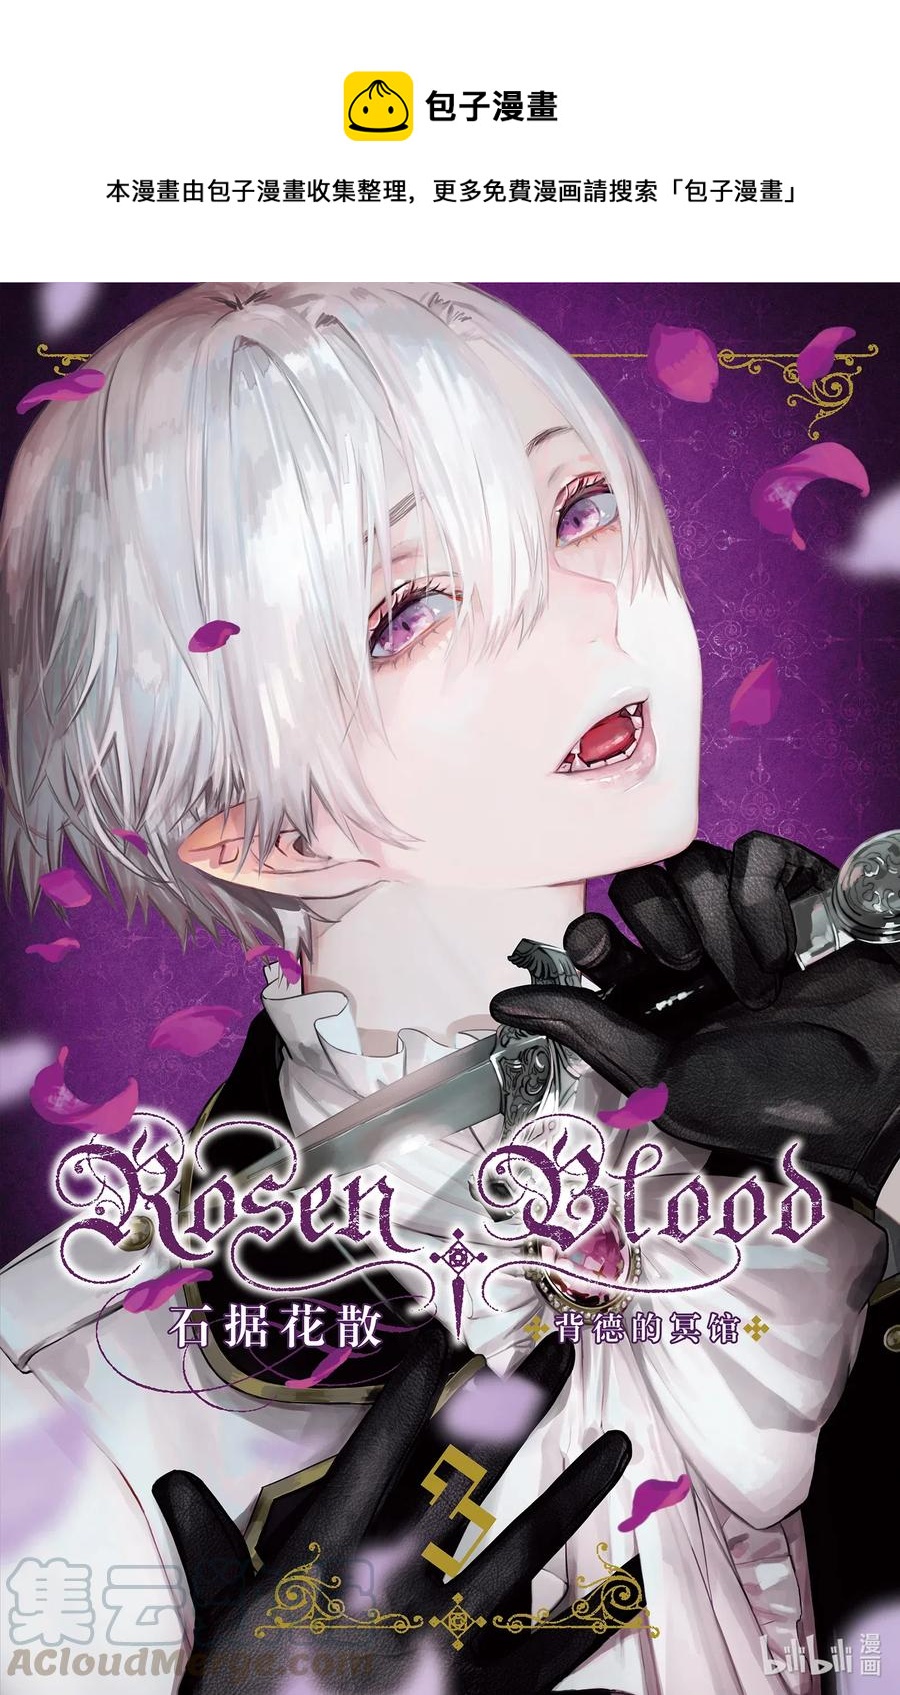 Rosen Blood 背德的冥館 - 11 11 - 1